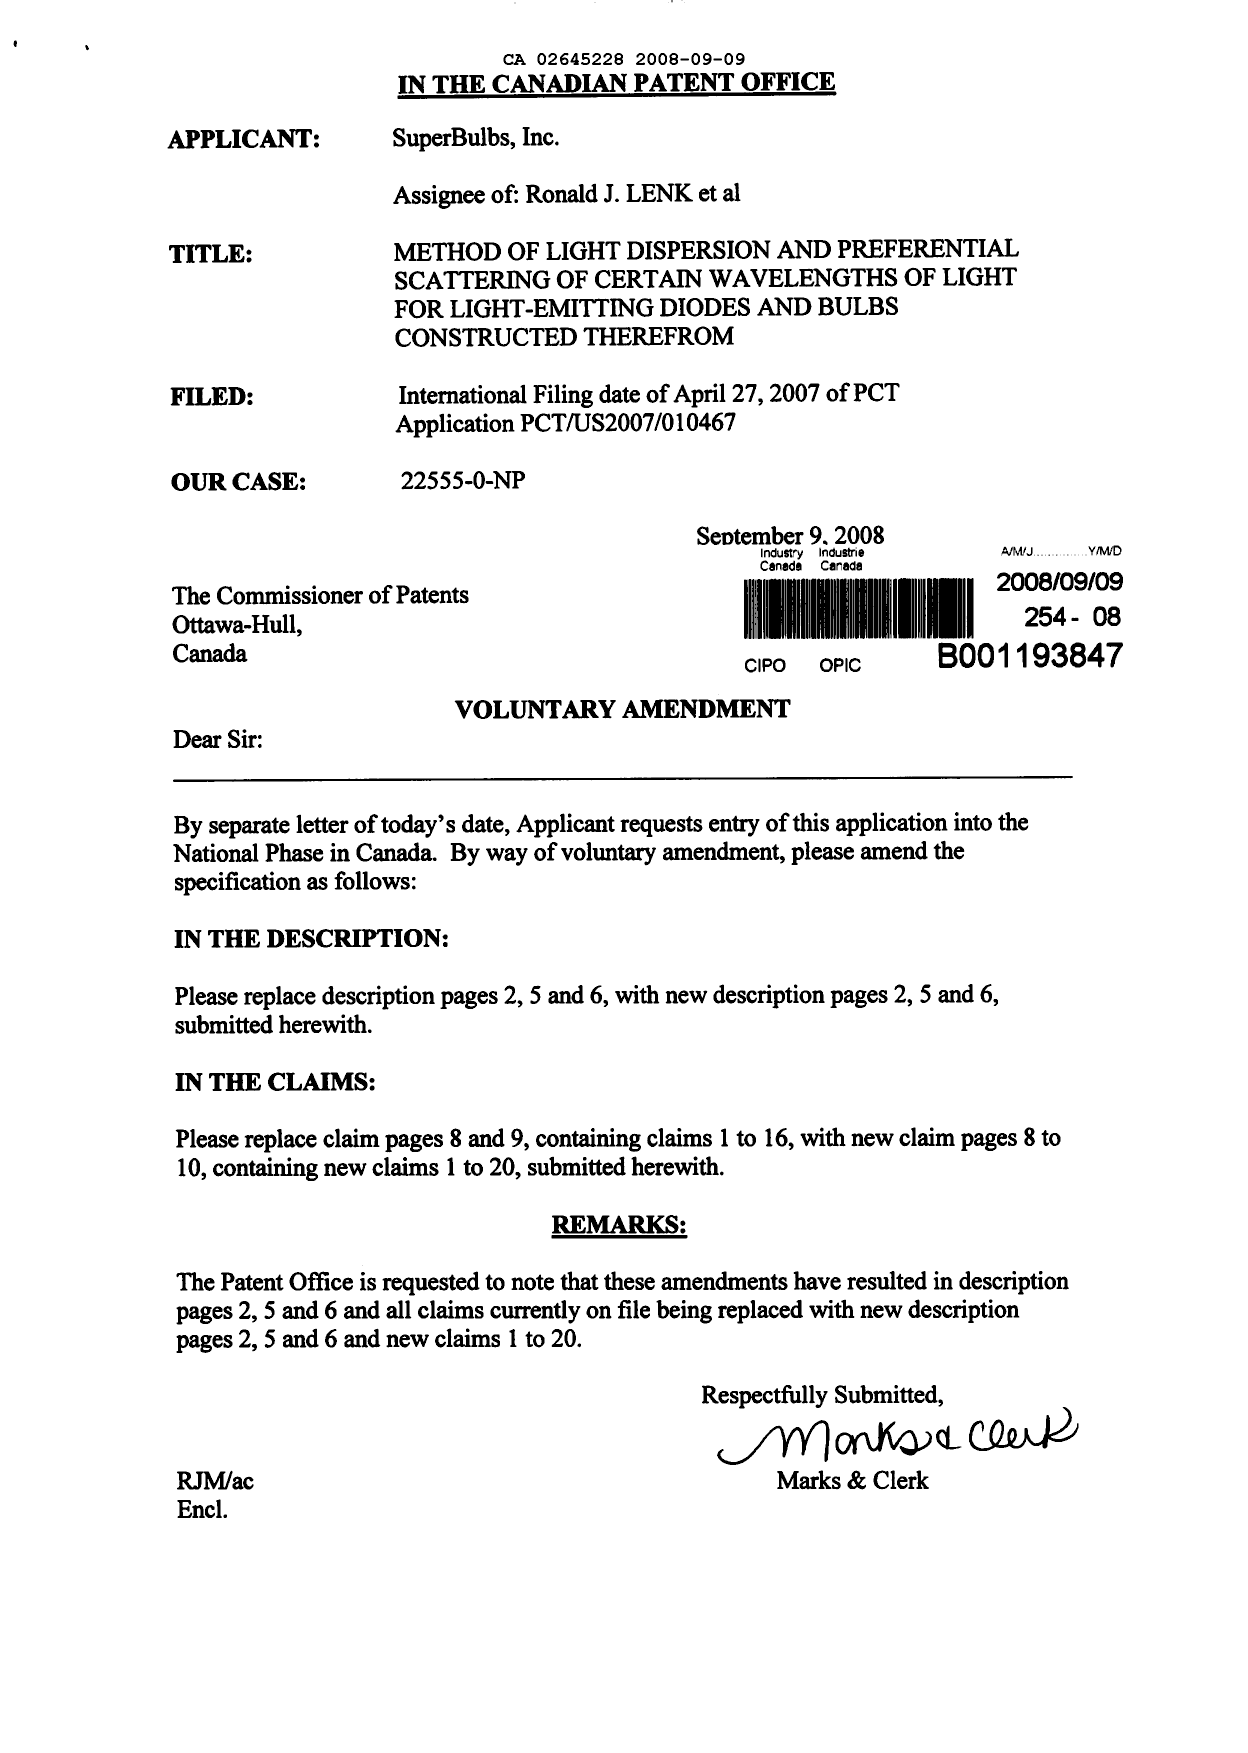 Canadian Patent Document 2645228. Prosecution-Amendment 20080909. Image 1 of 7